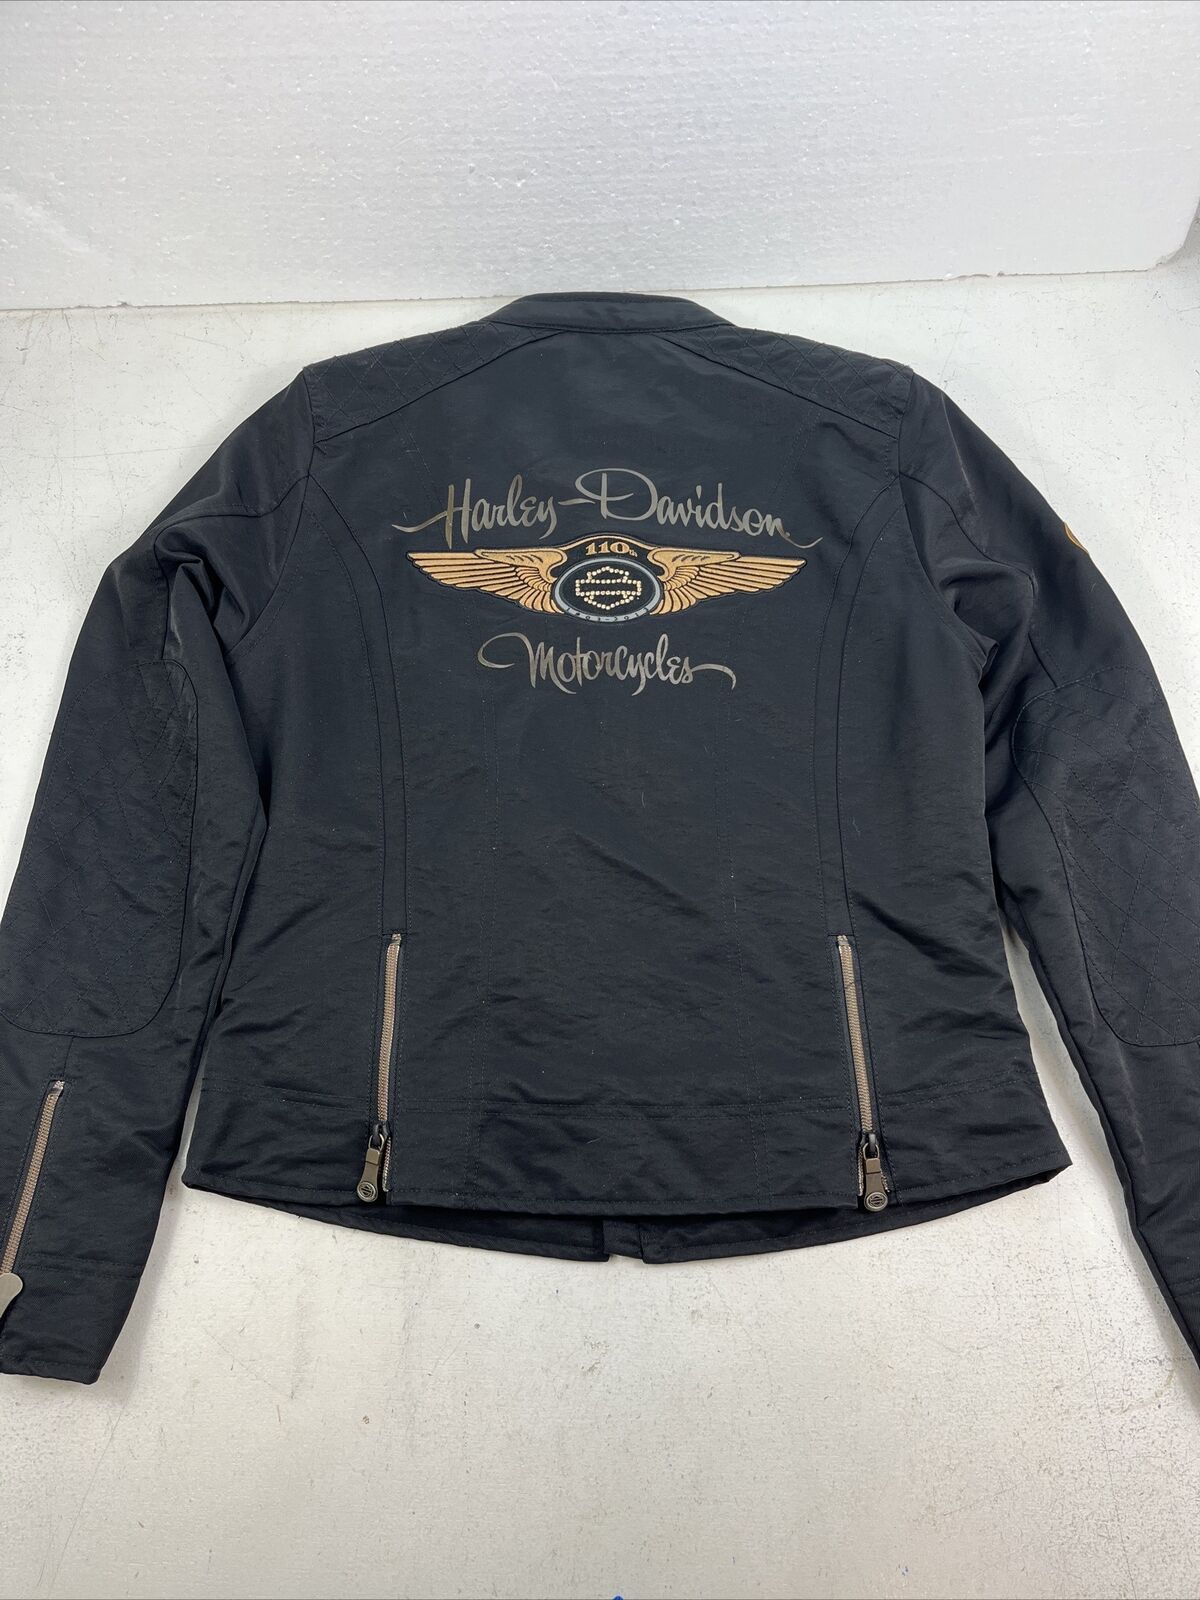 Harley Davidson Women’s Nylon Blend, 110th Anniversary Jacket. Size Med. FullZip